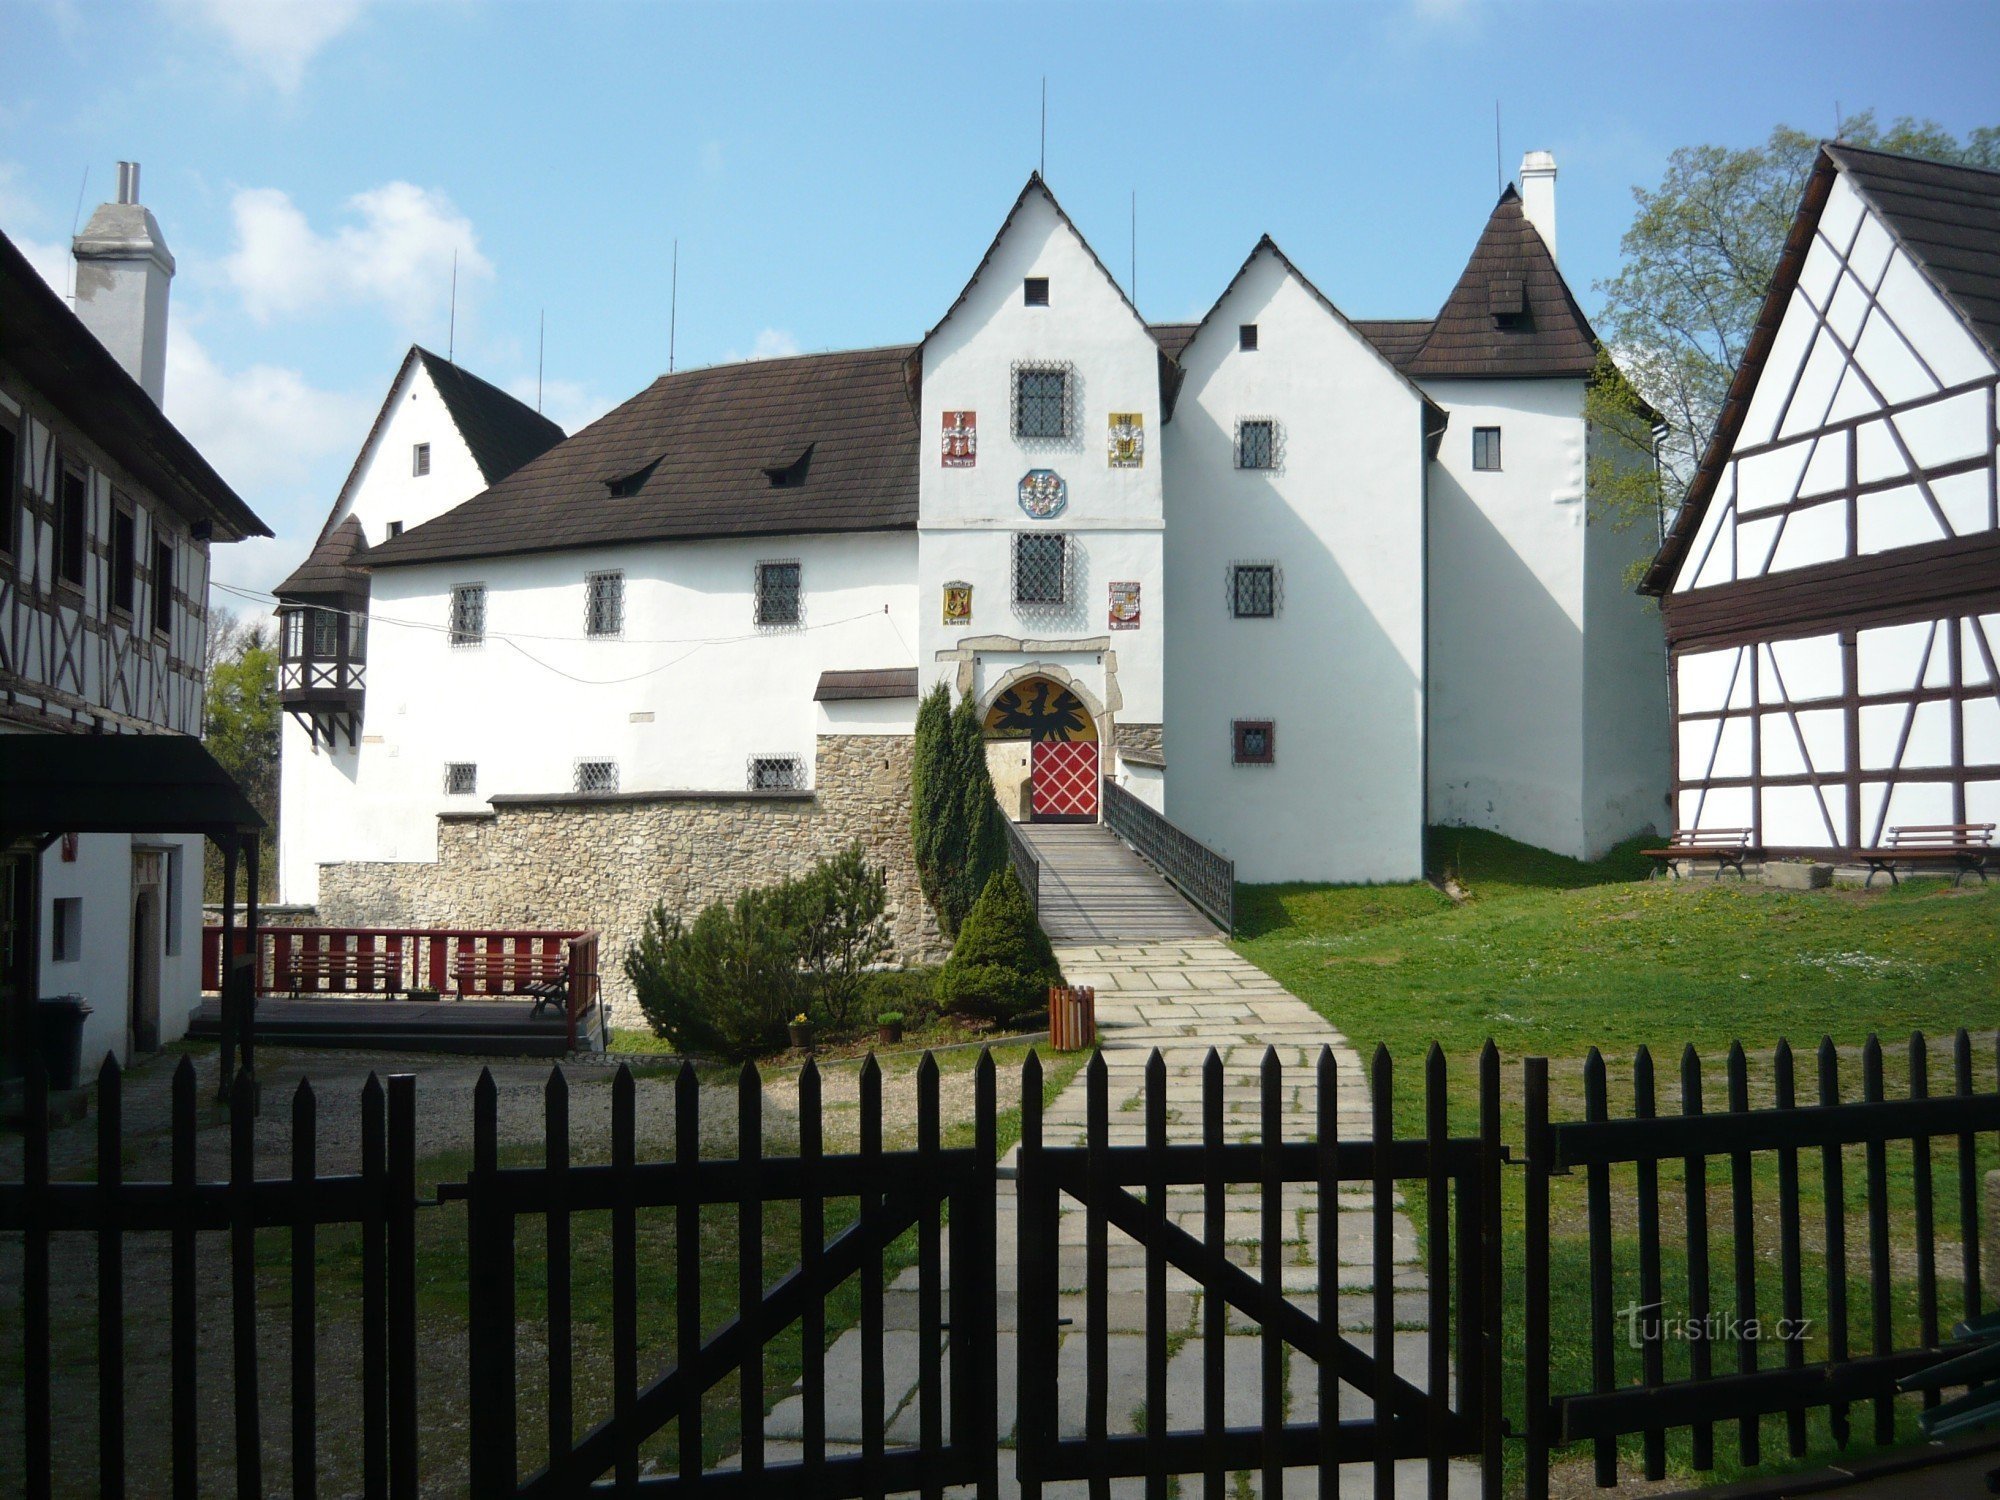 Educational trail Surroundings of Seeberg Castle (Ostroh)